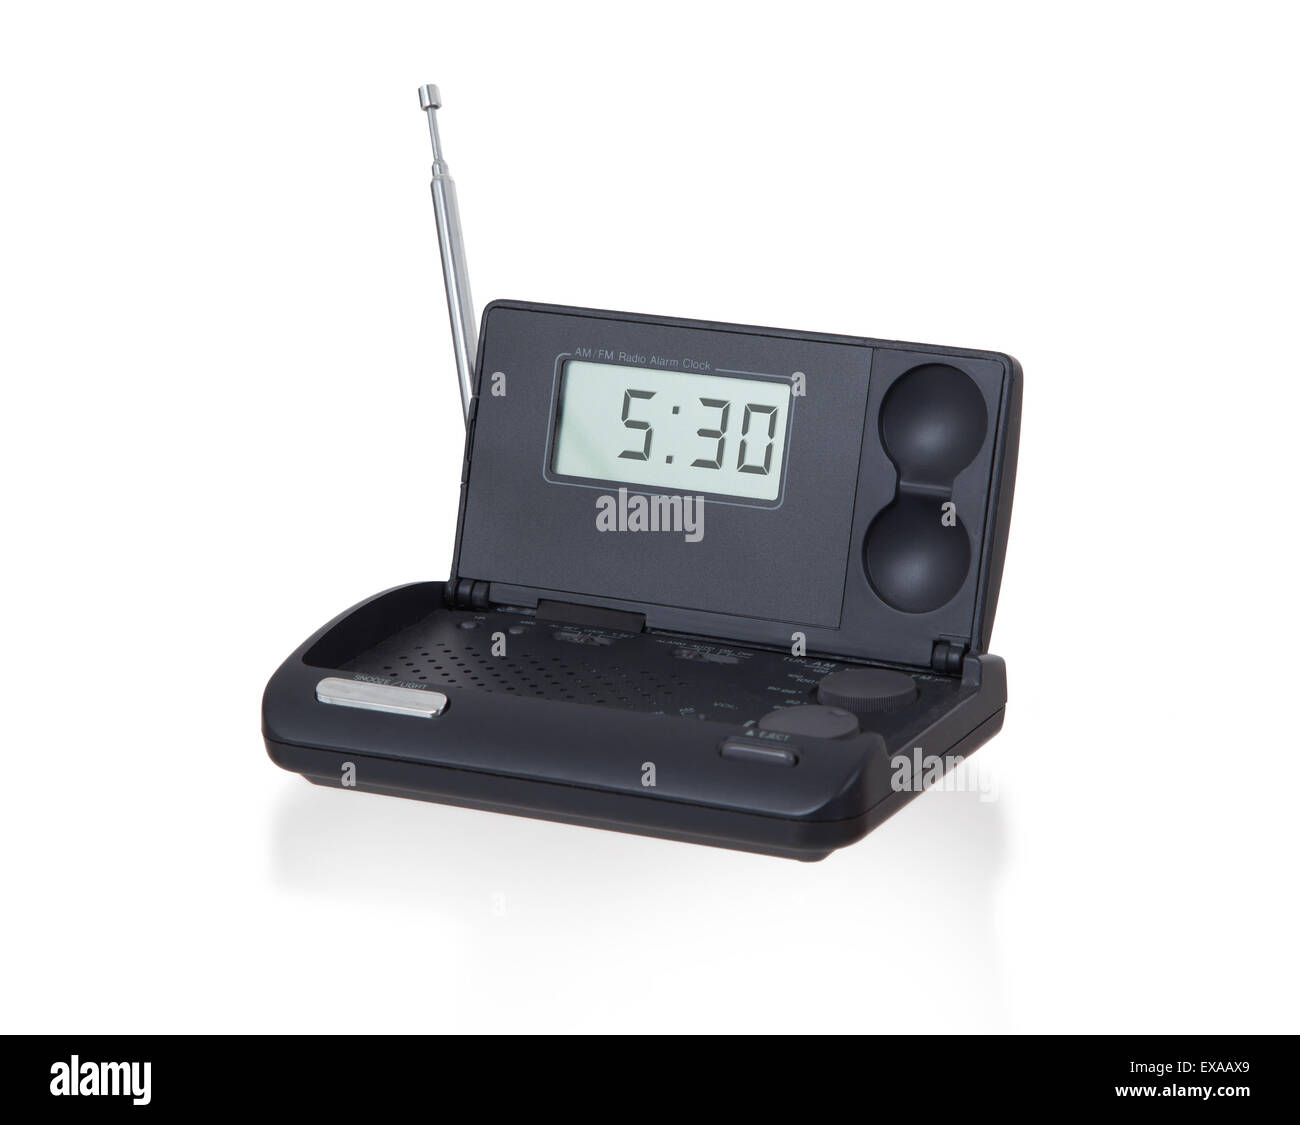 Old Digital Radio Alarm Clock Isolated On White Time Is 5 30 Stock Photo Alamy